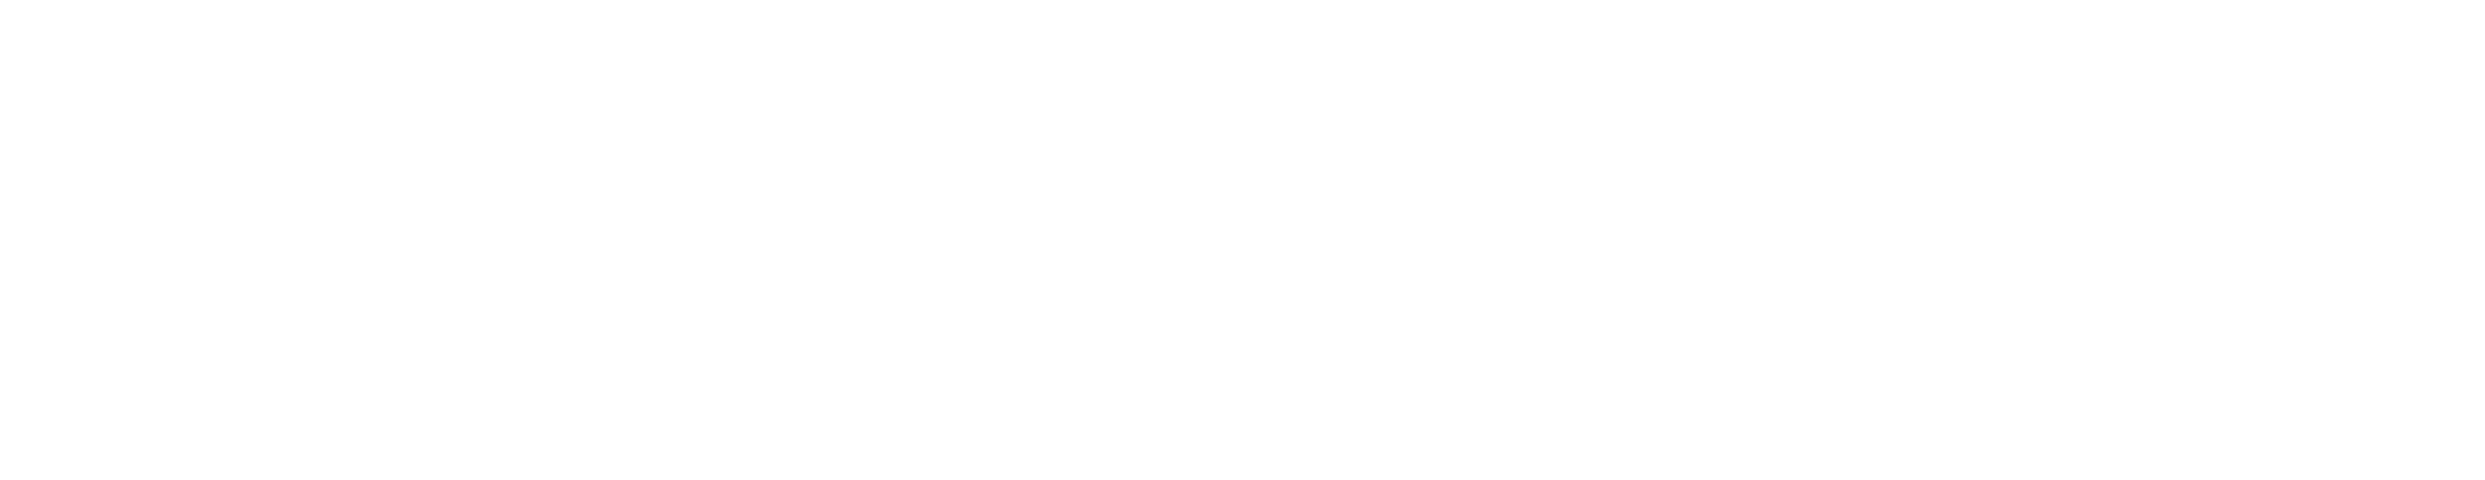 officine-bonaccini-logo-bianco